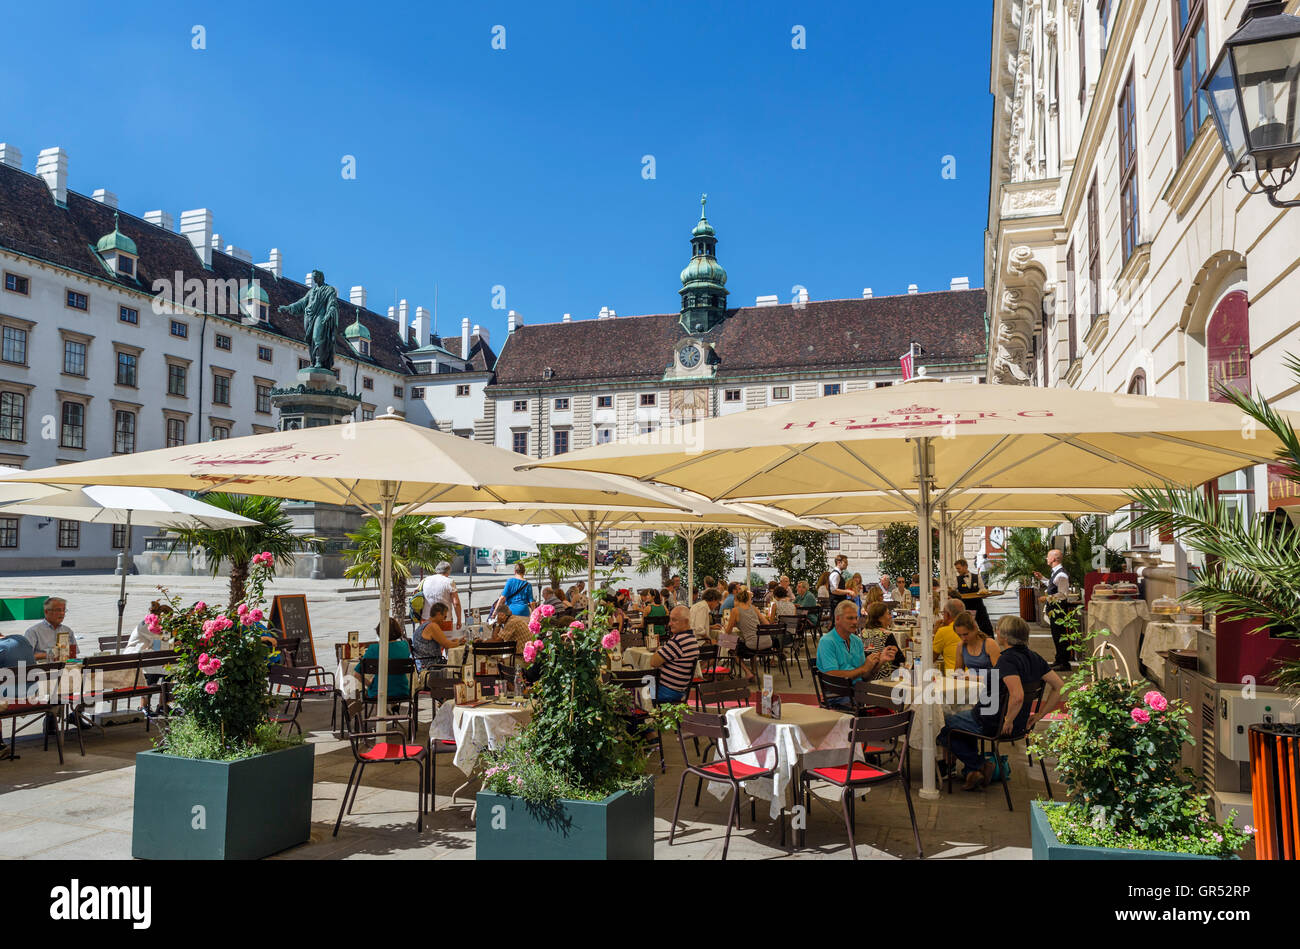 Vienna, Cafe. Restaurant in front of the Reichskanzleitrakt (Imperial Chancellory Wing), Hofburg Palace, Vienna, Austria. Stock Photo